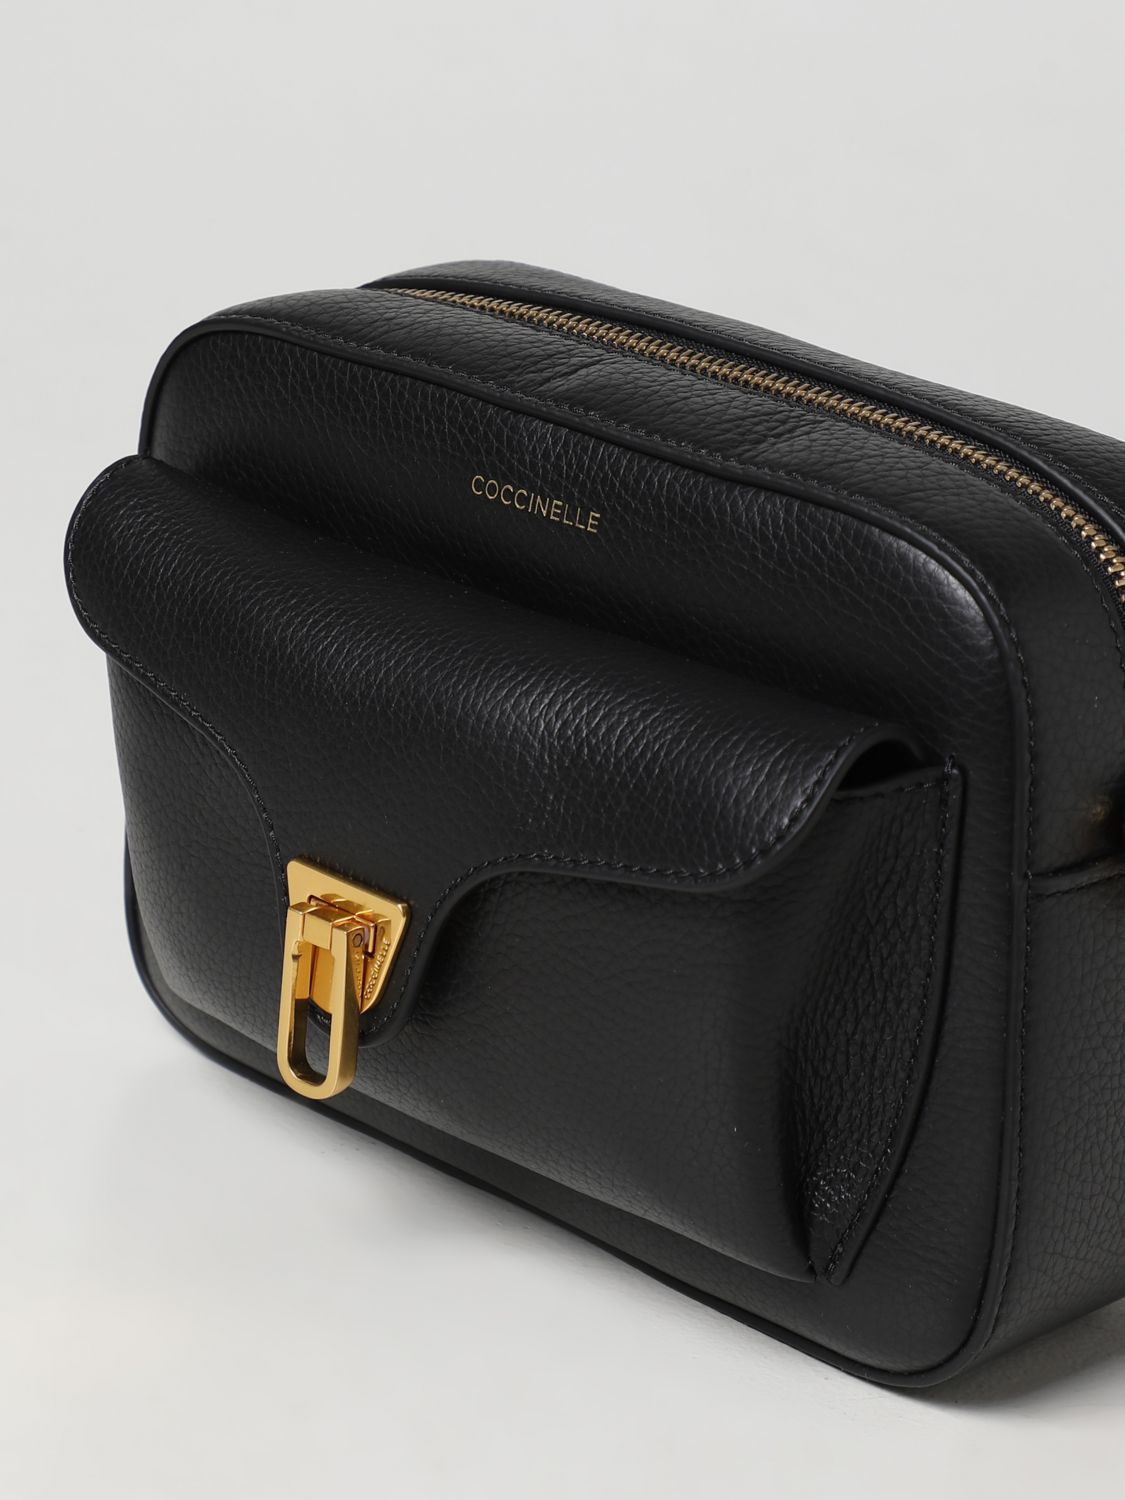 COCCINELLE: mini bag for woman - Black | Coccinelle mini bag ...